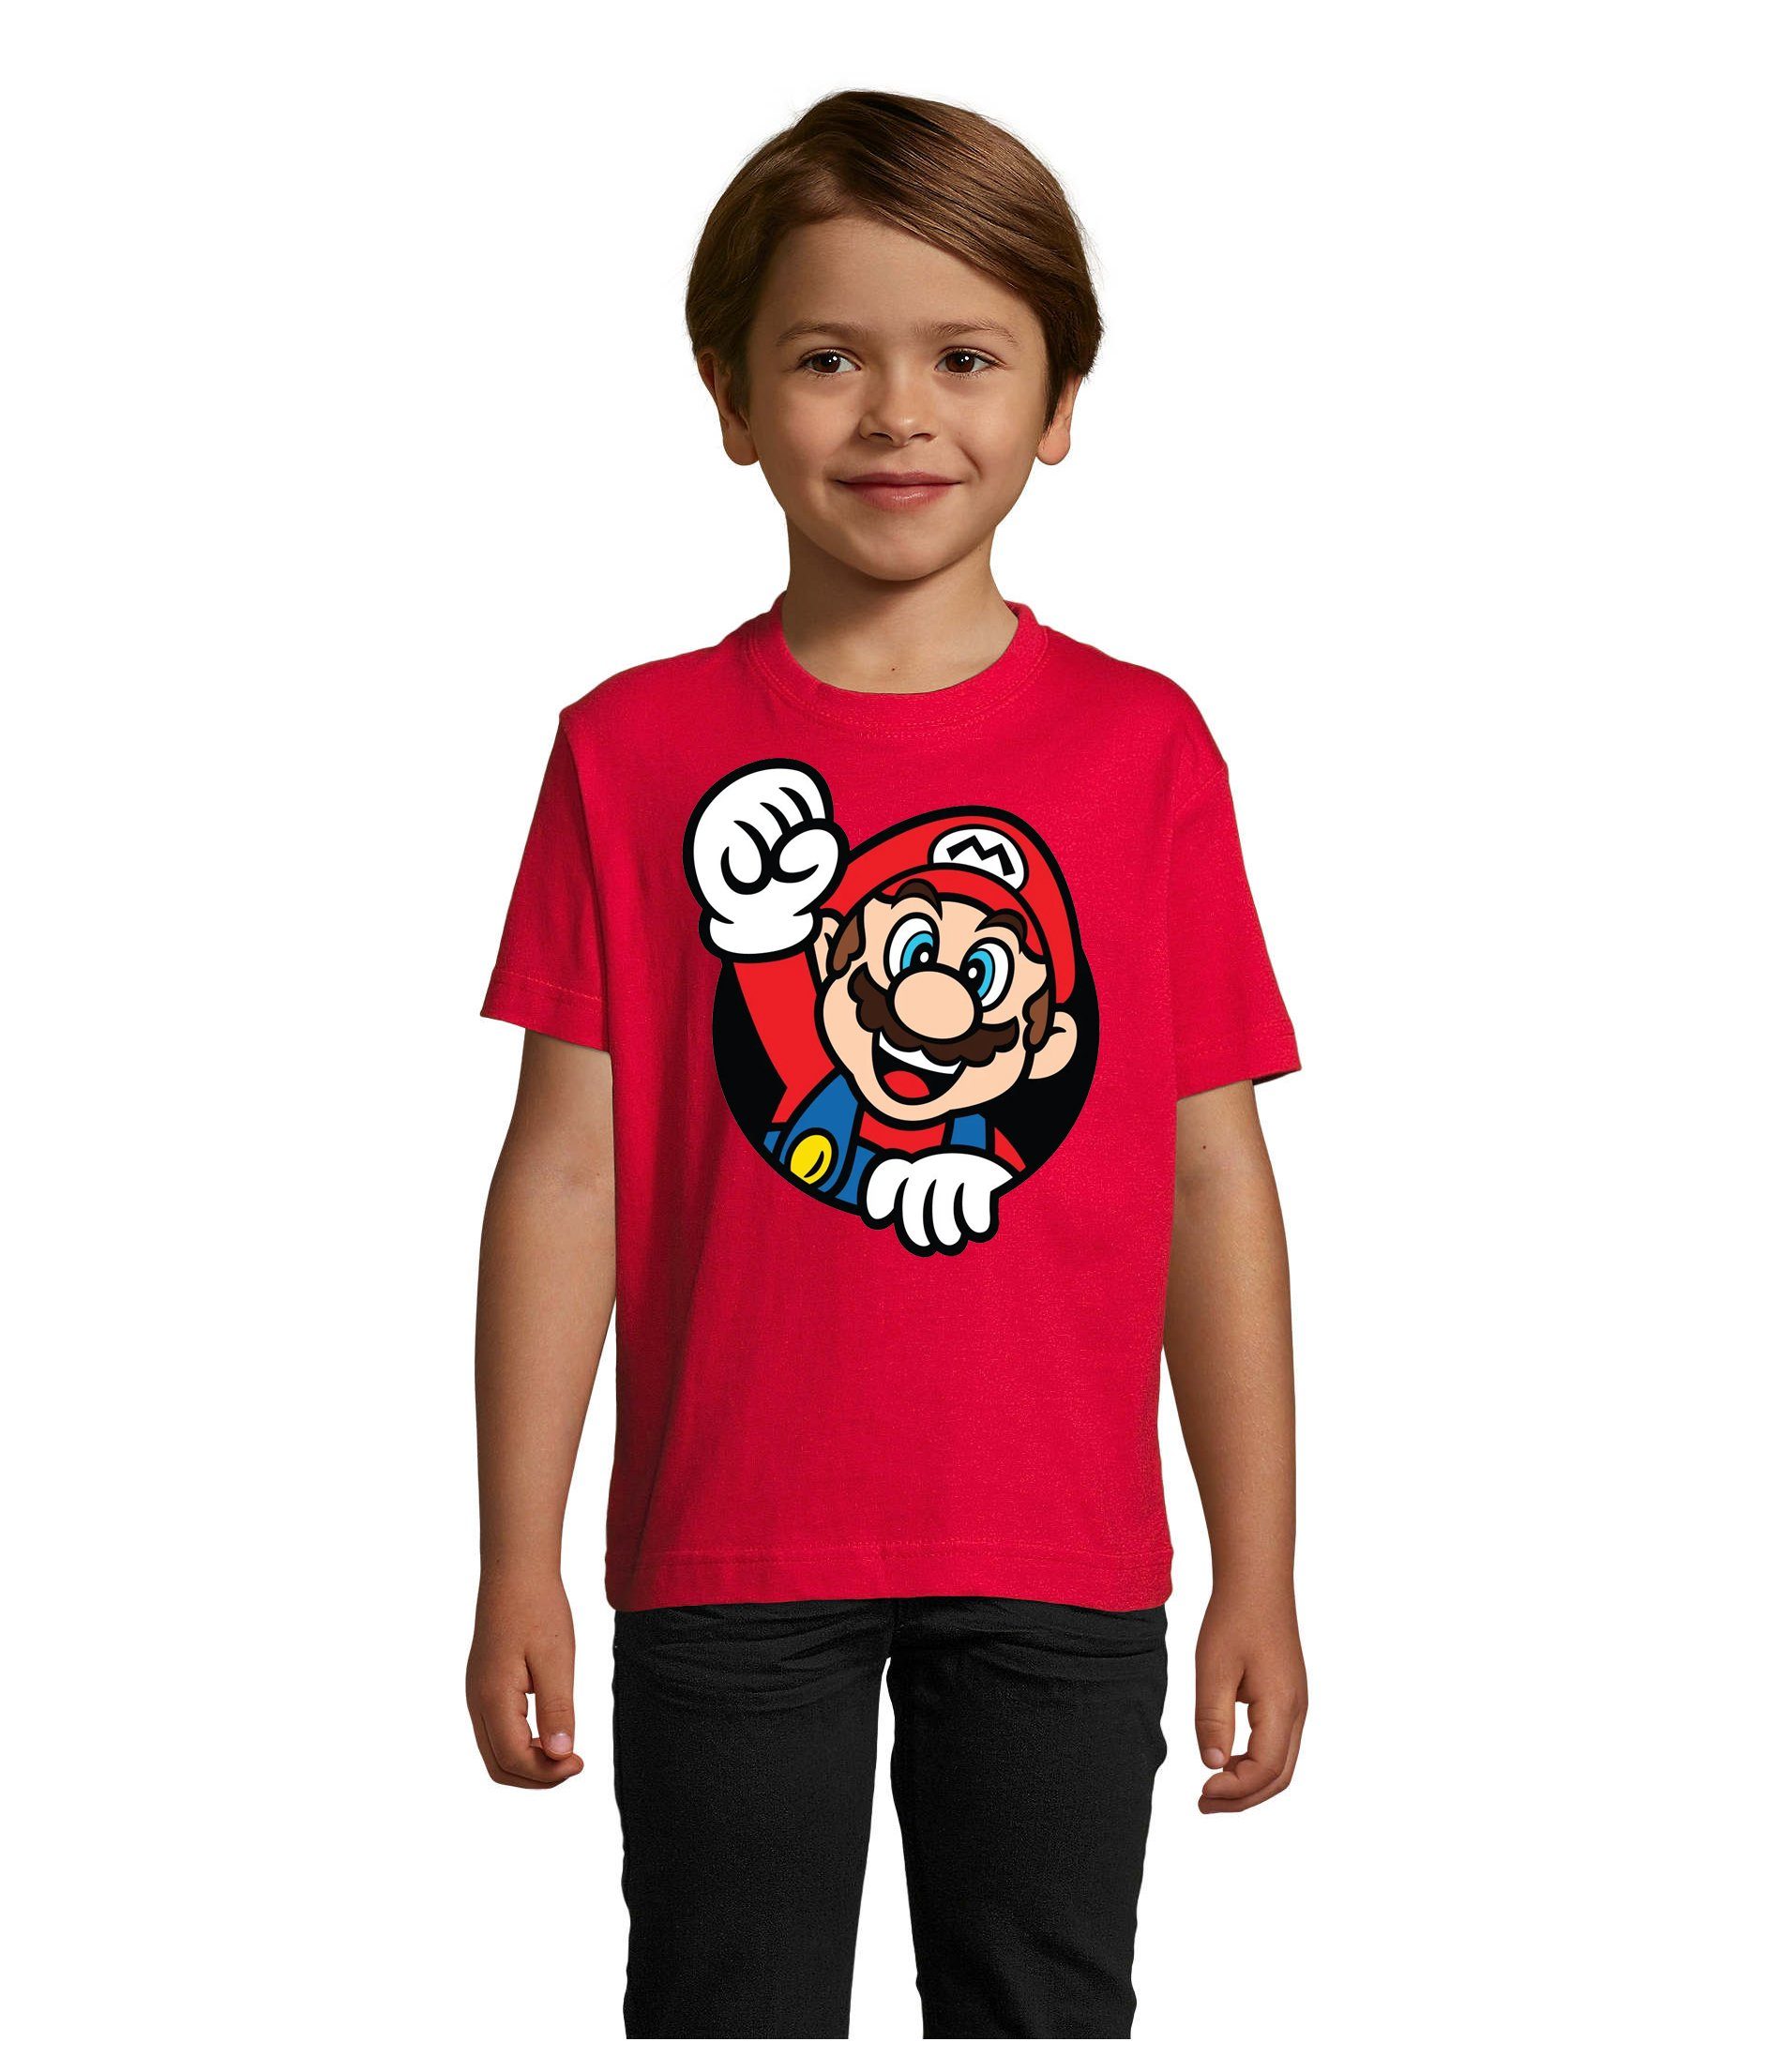 Nintendo Brownie Nerd Super Kinder Faust & Spiel Rot Konsole Gaming Mario Konsole T-Shirt Blondie